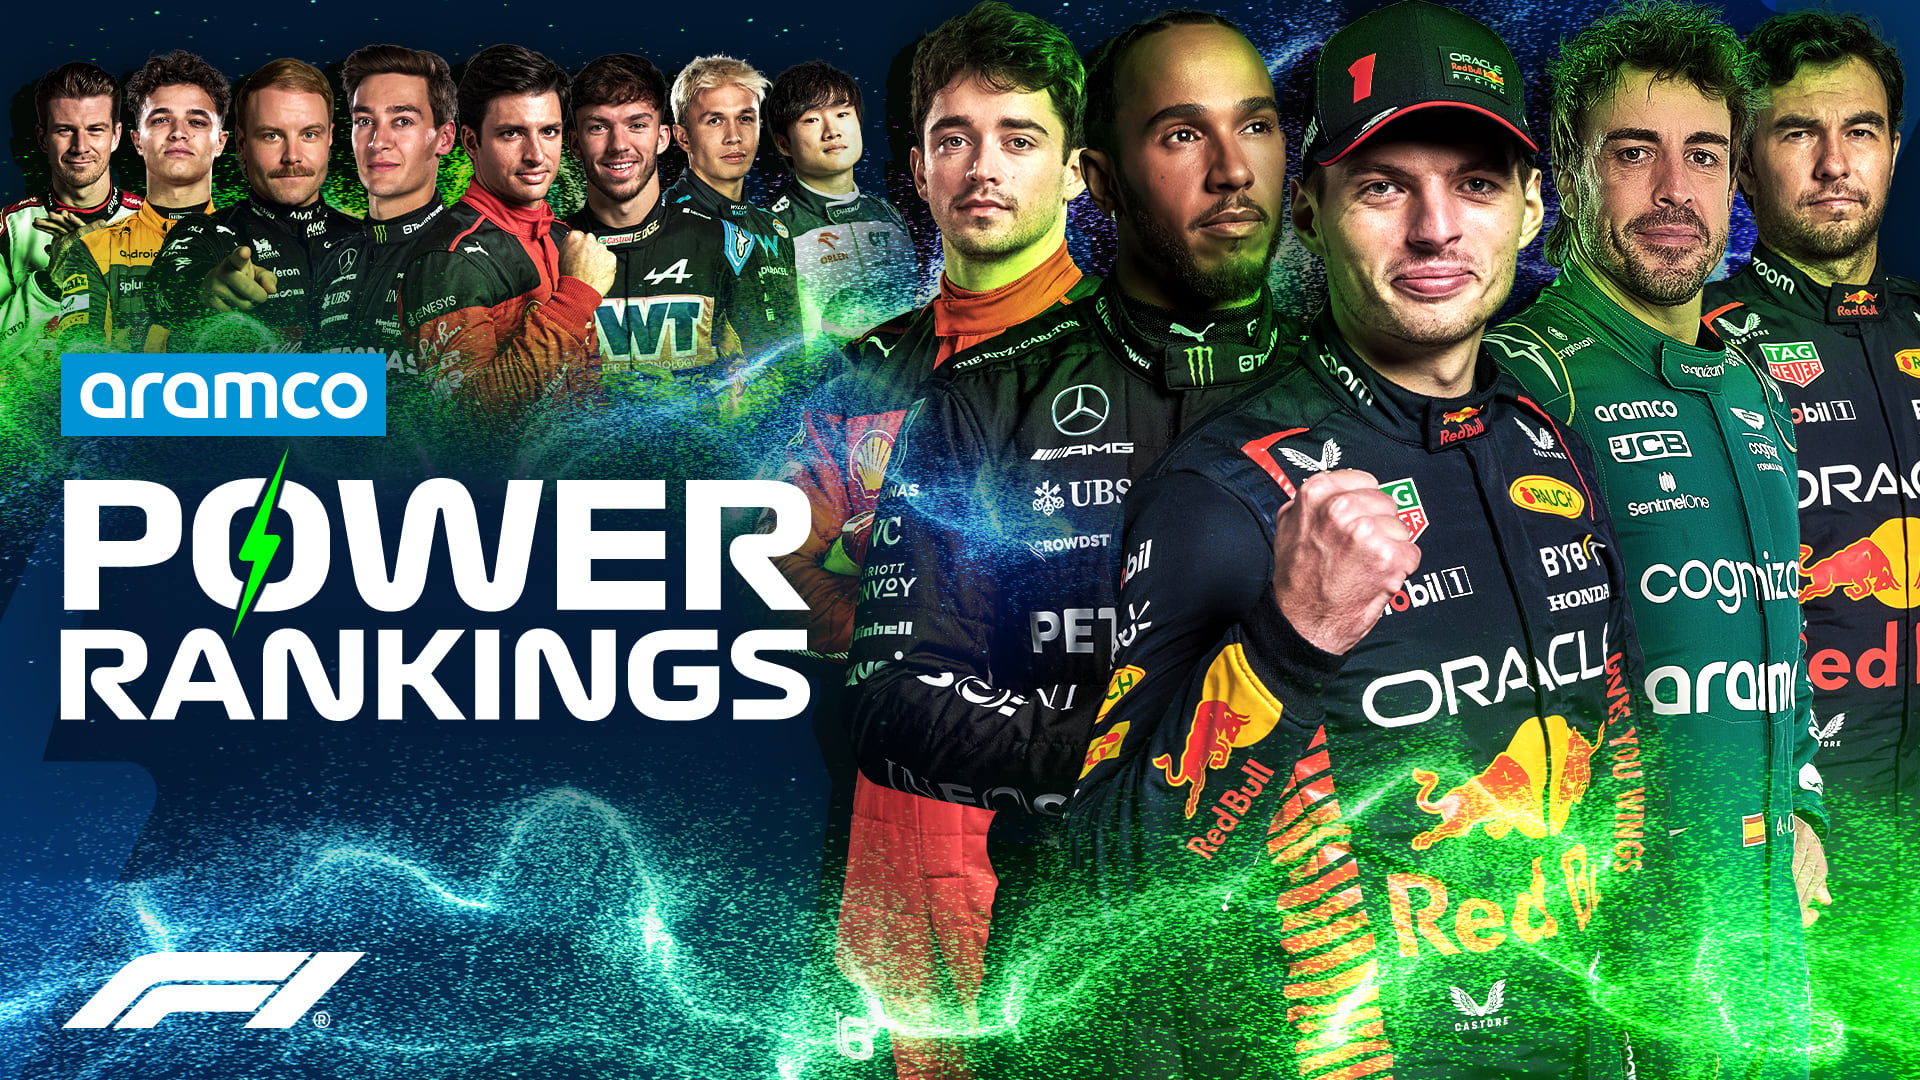 Power Rankings for Miami GP : r/formula1